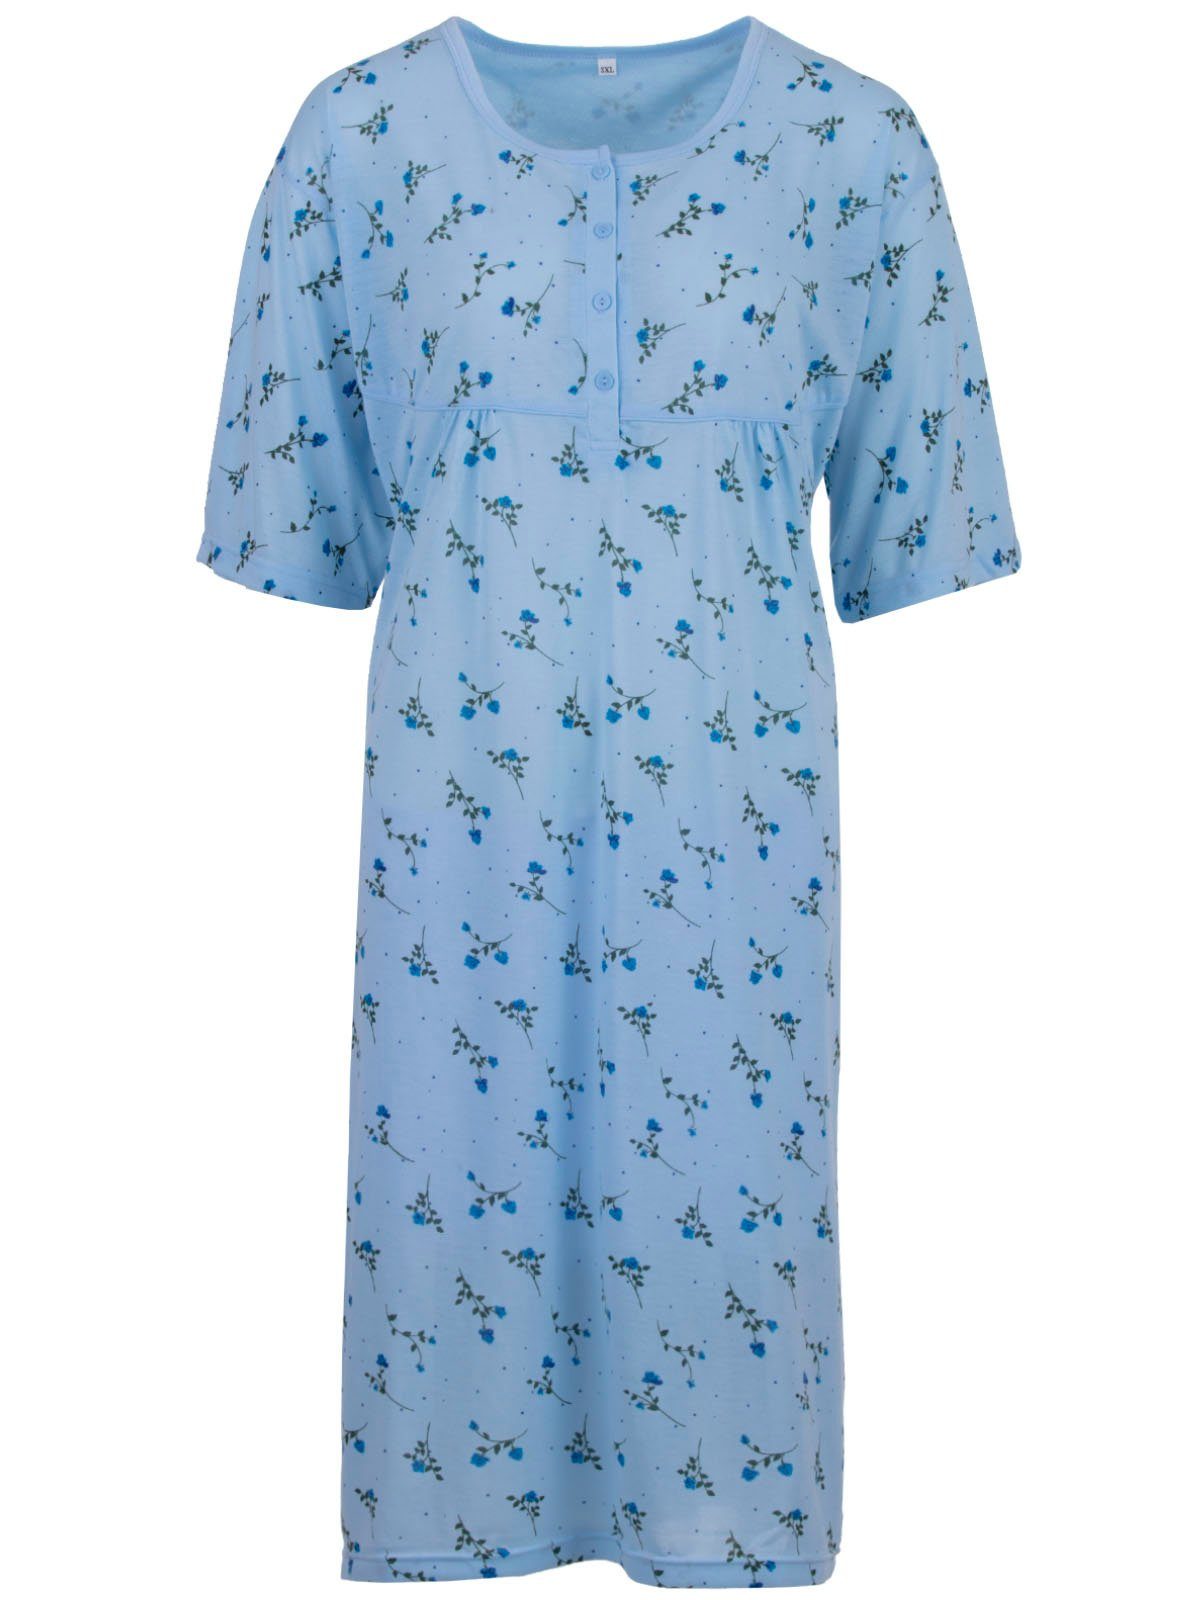 Nachthemd Nachthemd Lucky - 3XL-6XL Kurzarm blau Blumen